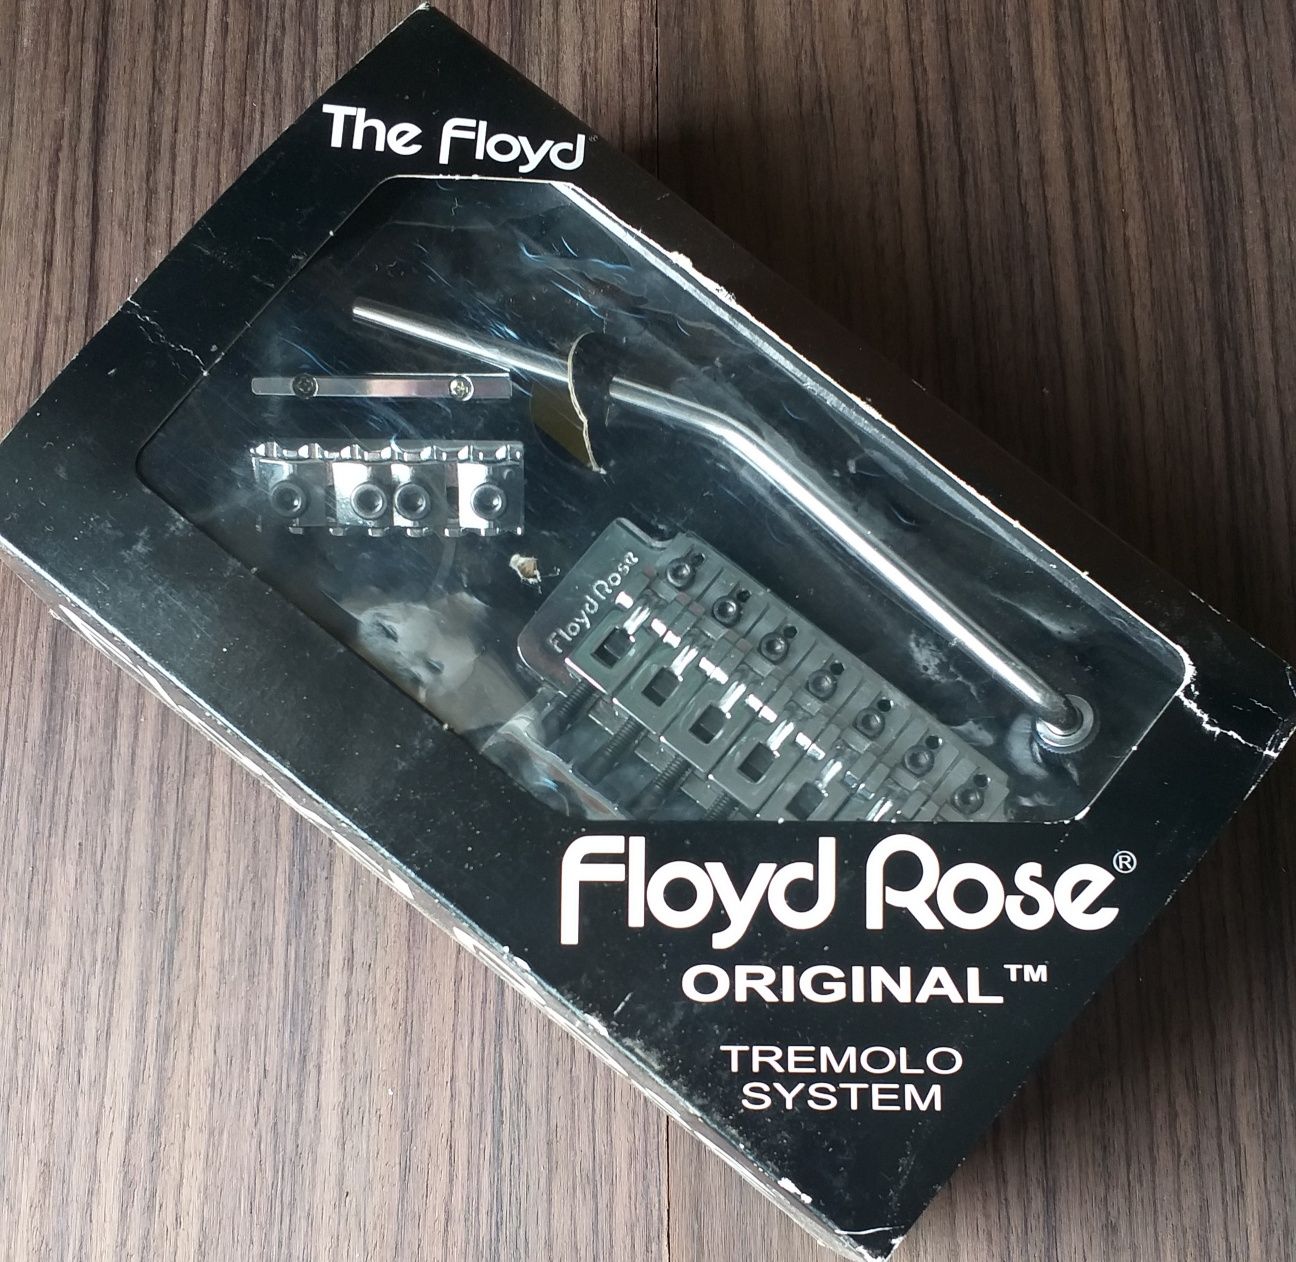 Floyd Rose
Original 7-String Tremolo System made in Germany